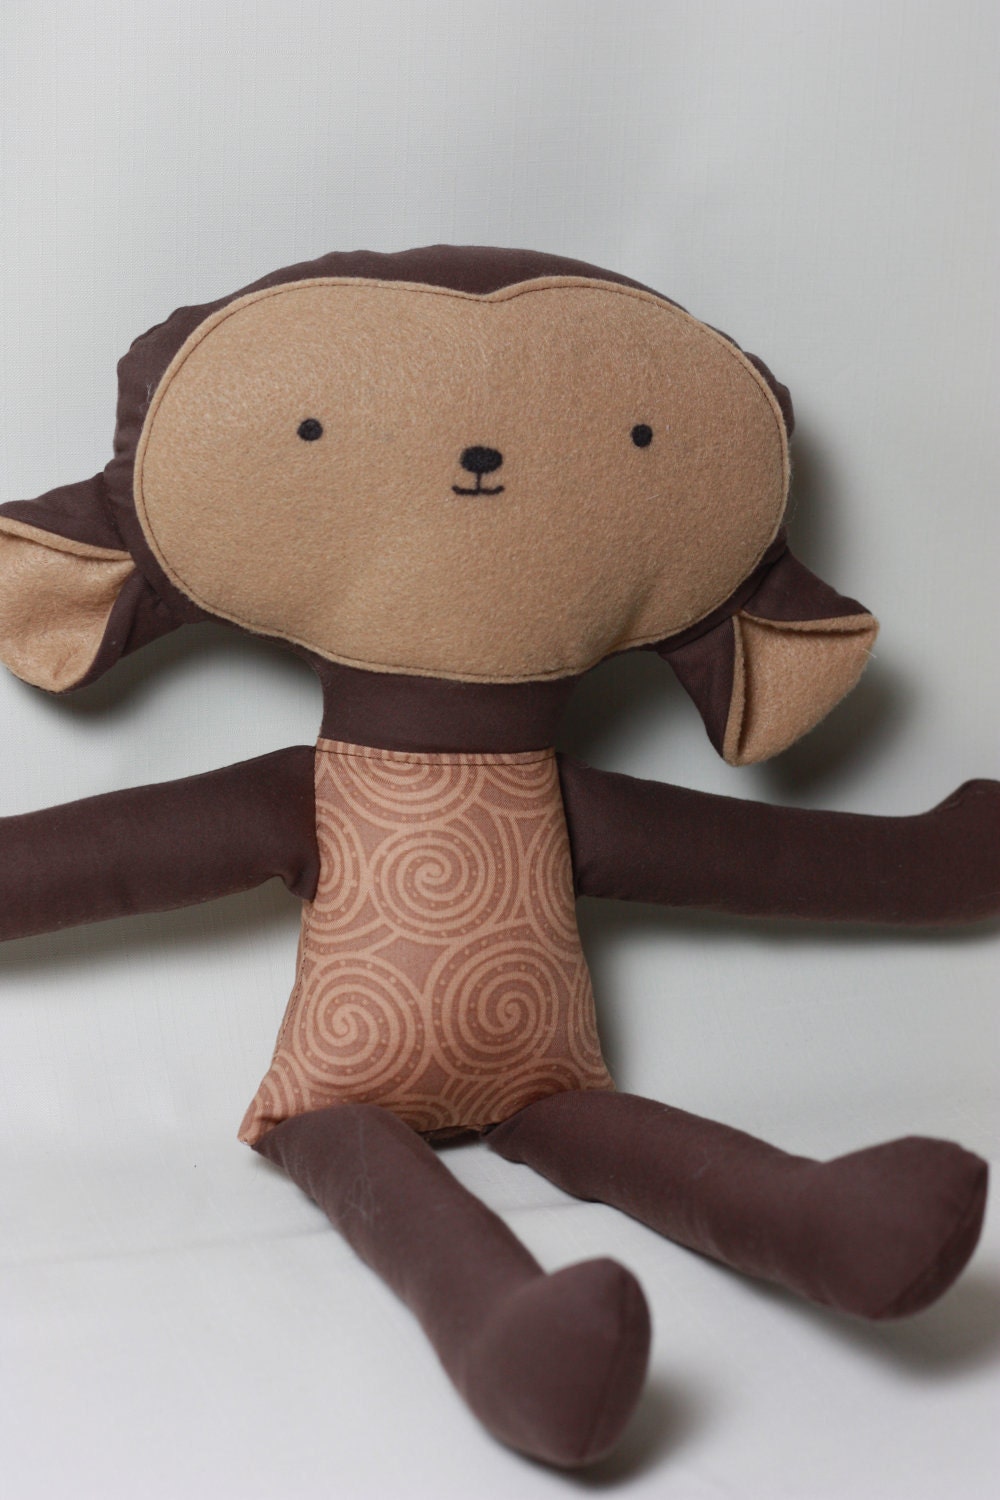 Soft Handmade Cloth Monkey Doll - Brown Tones